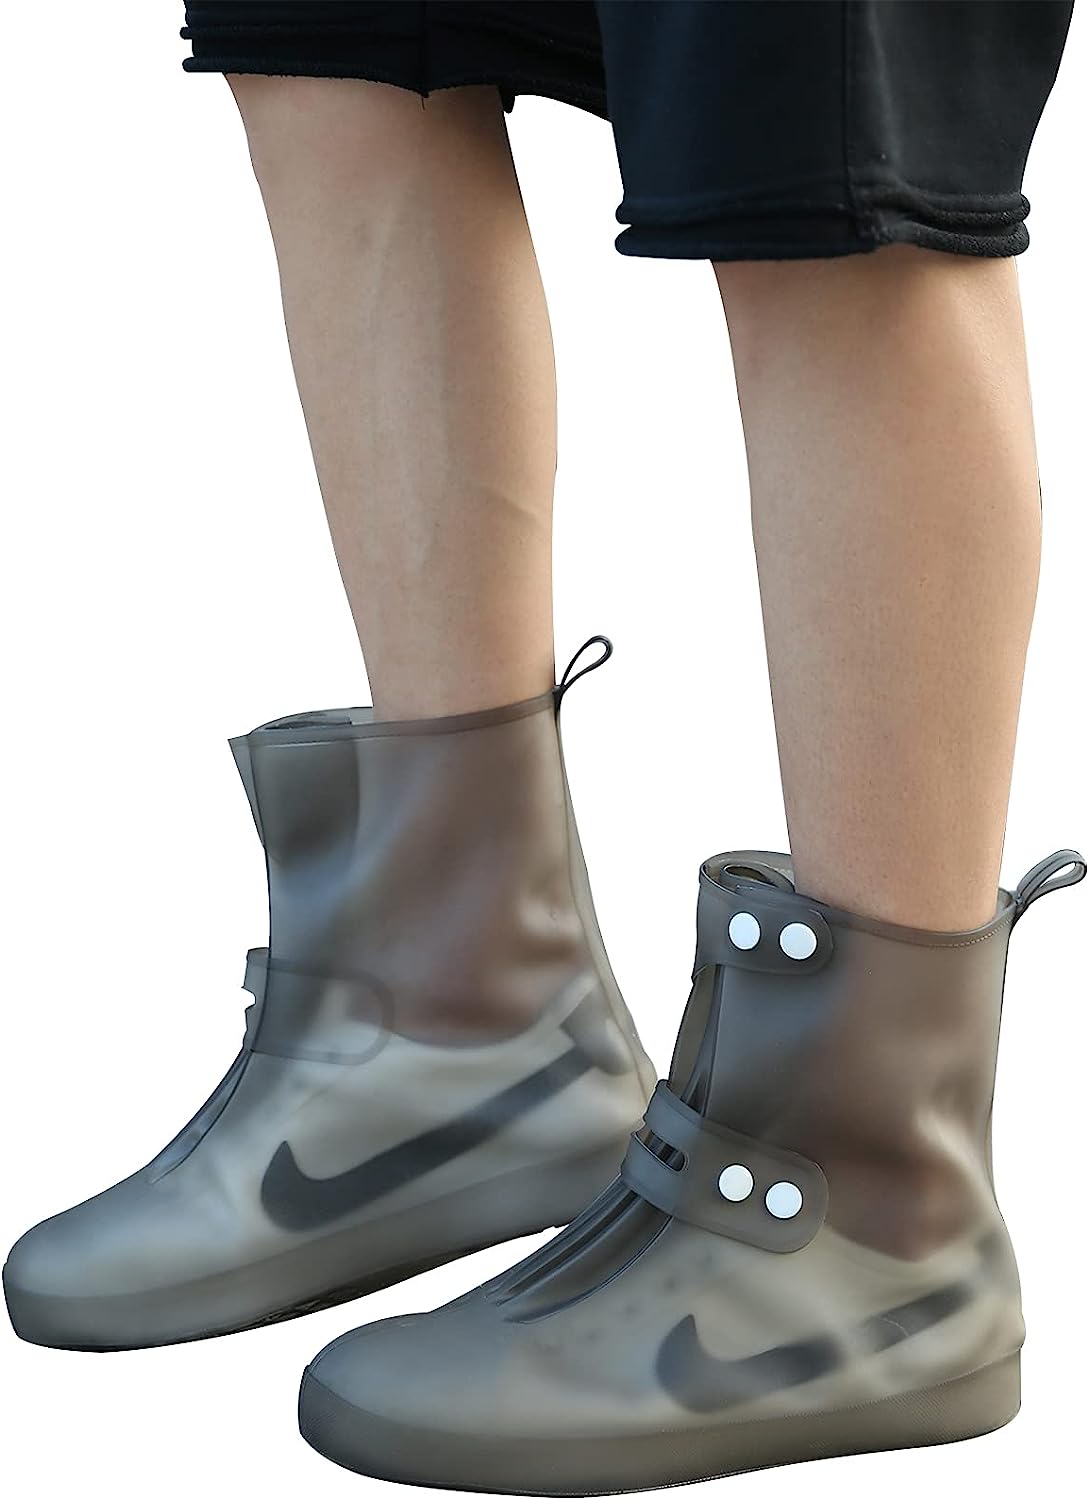 McBiuti Waterproof Rain Shoe Covers, Reusable Foldable [...]